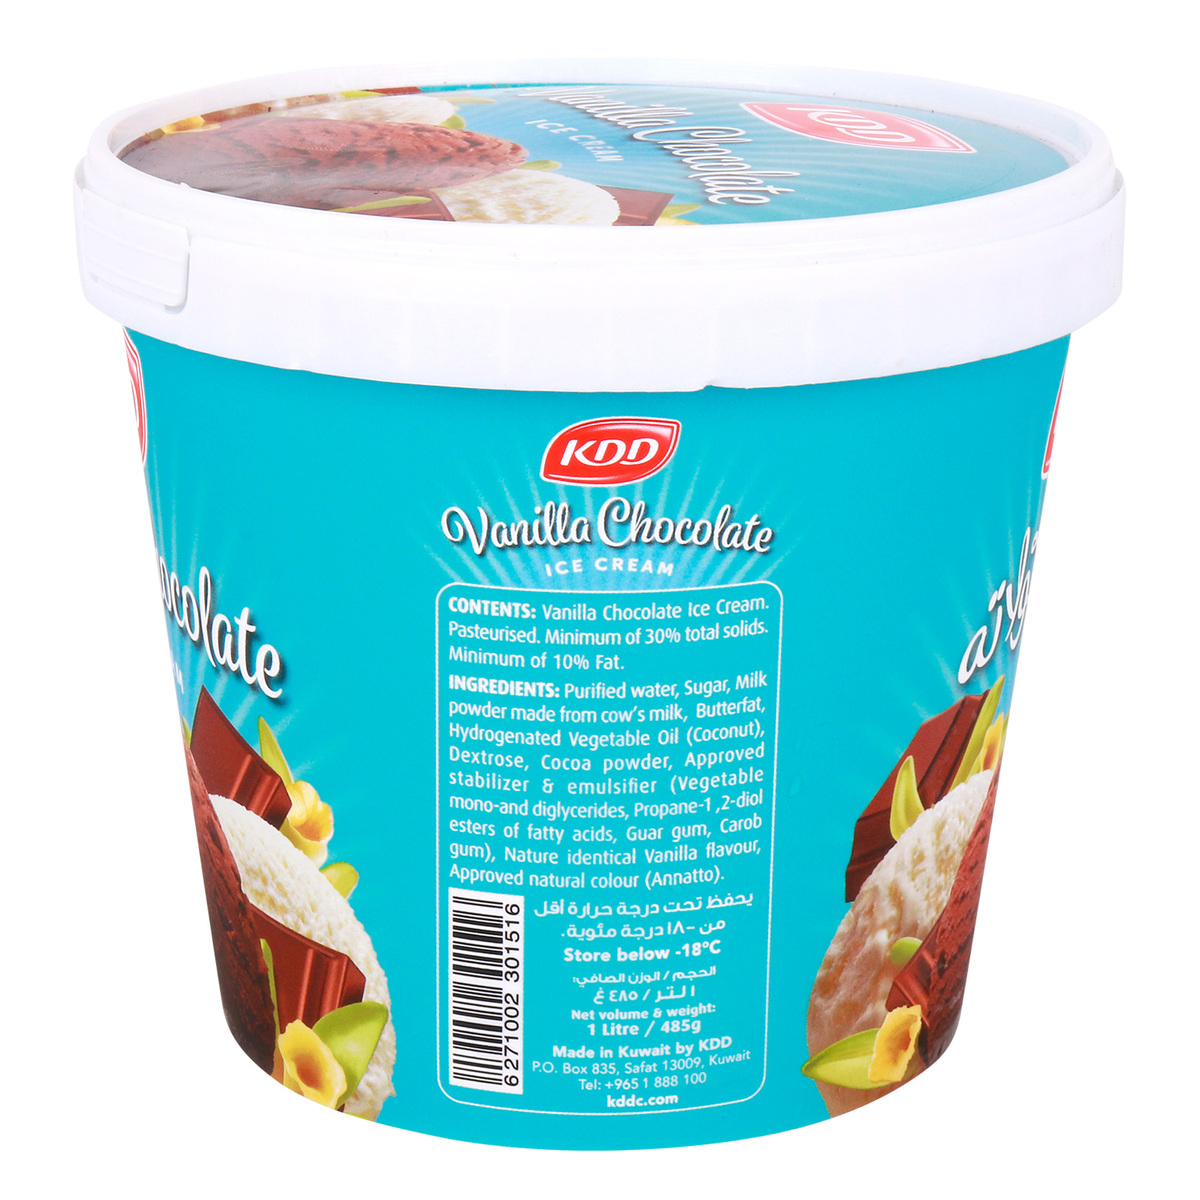 KDD Vanilla Chocolate Ice Cream 1Litre